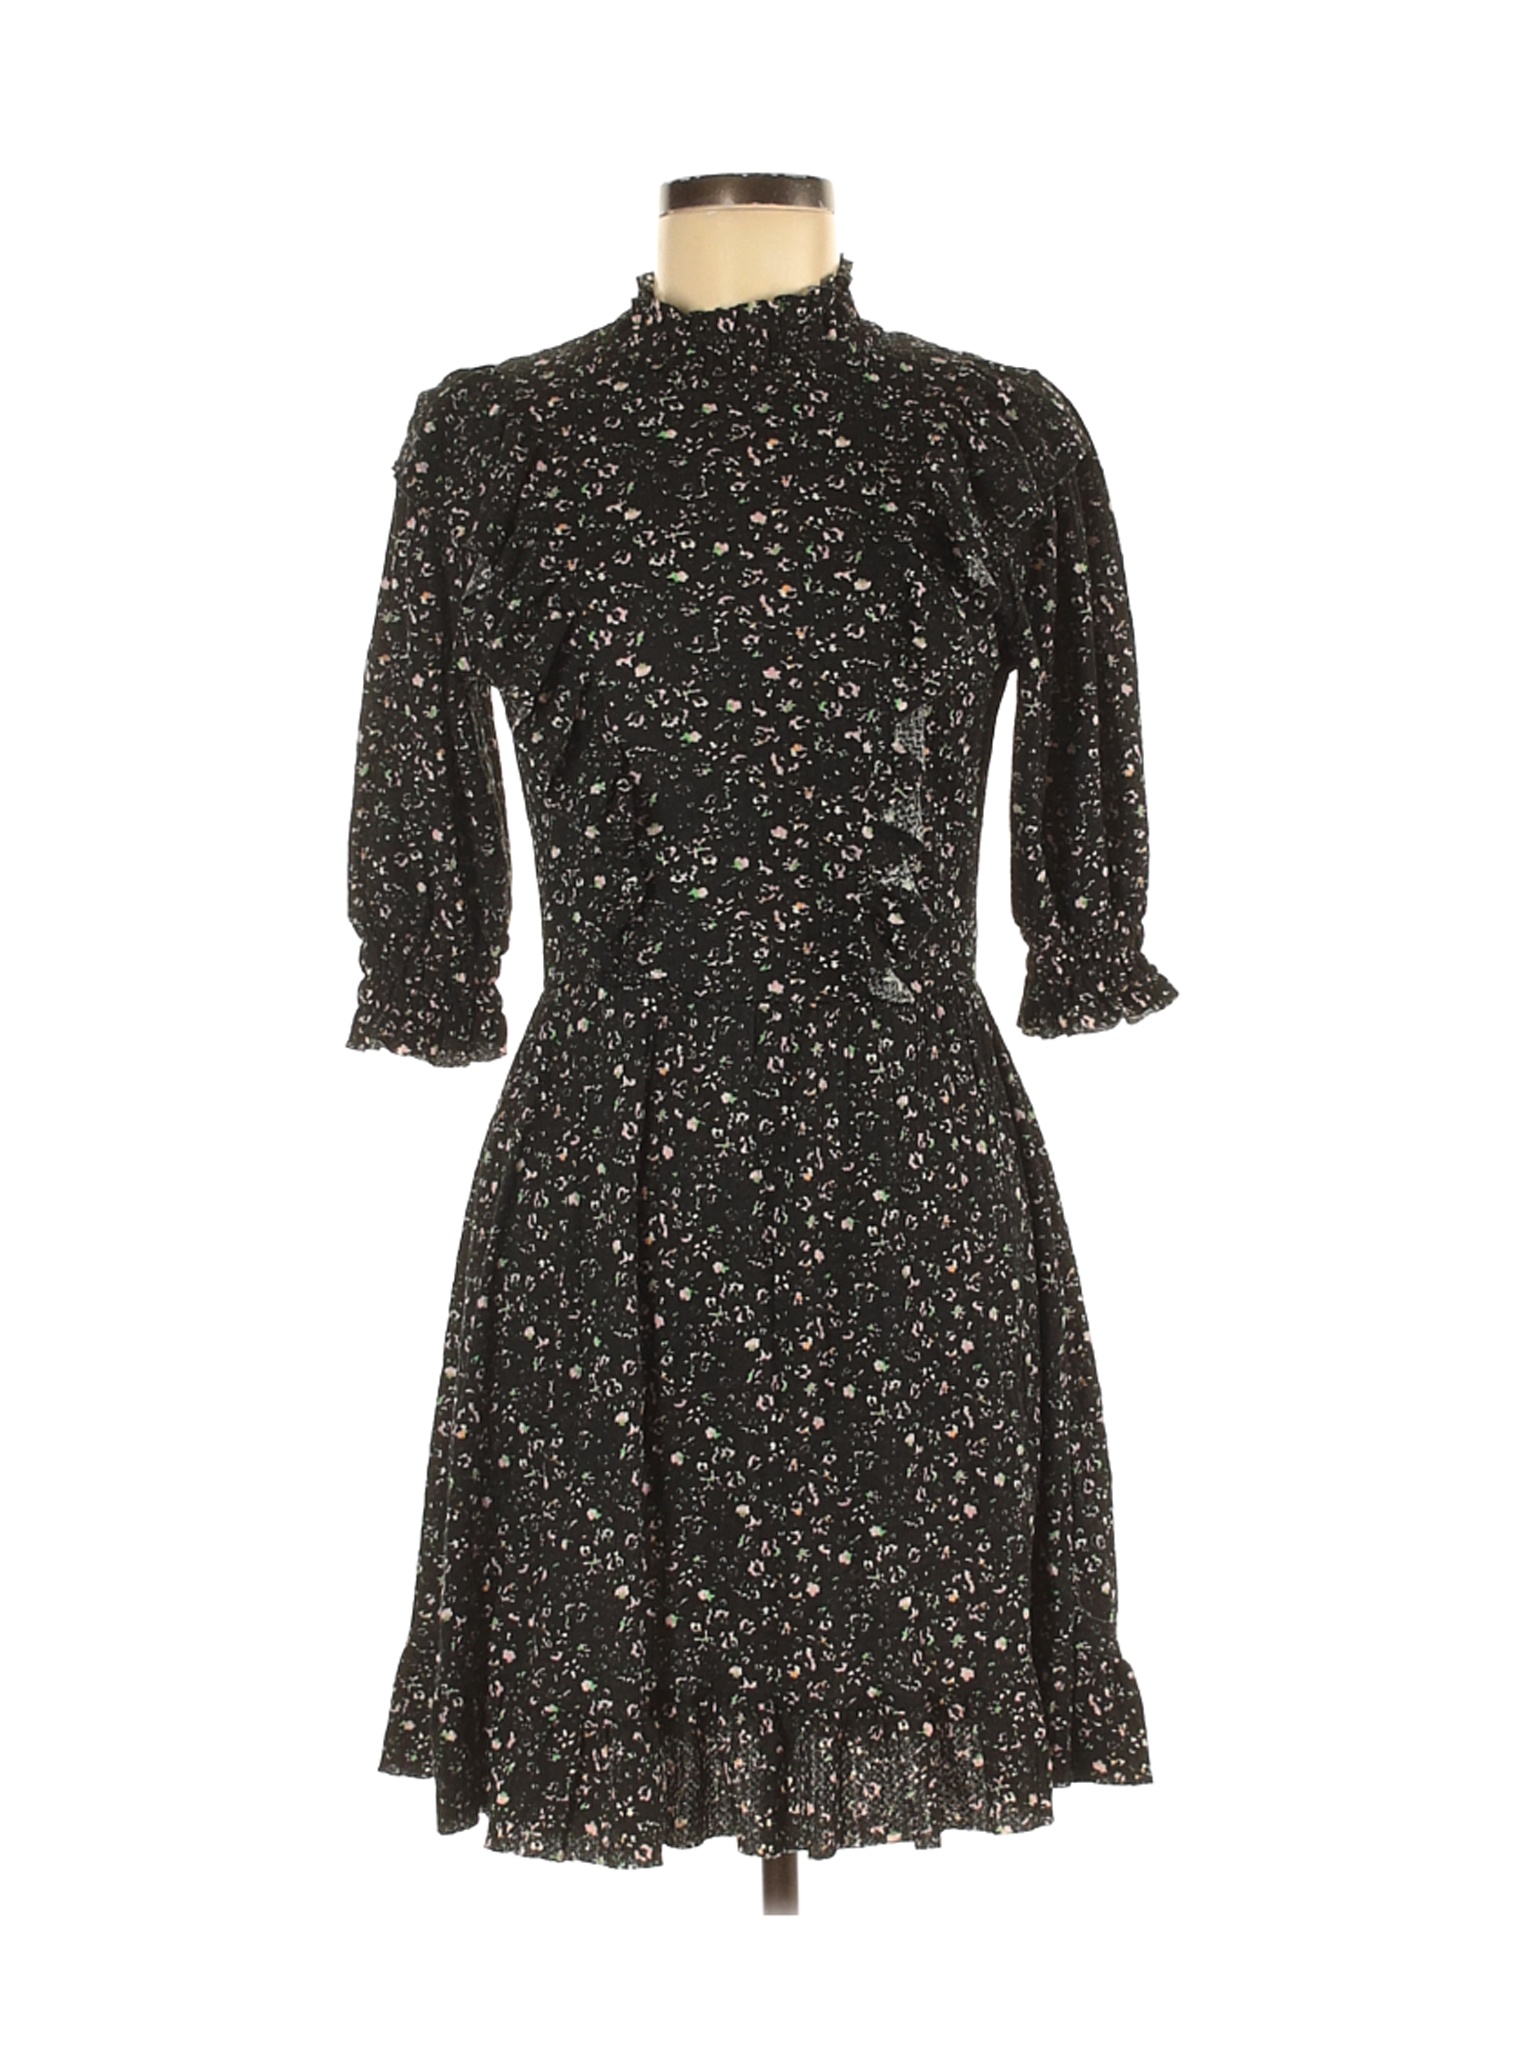 Zara Women Black Casual Dress M | eBay